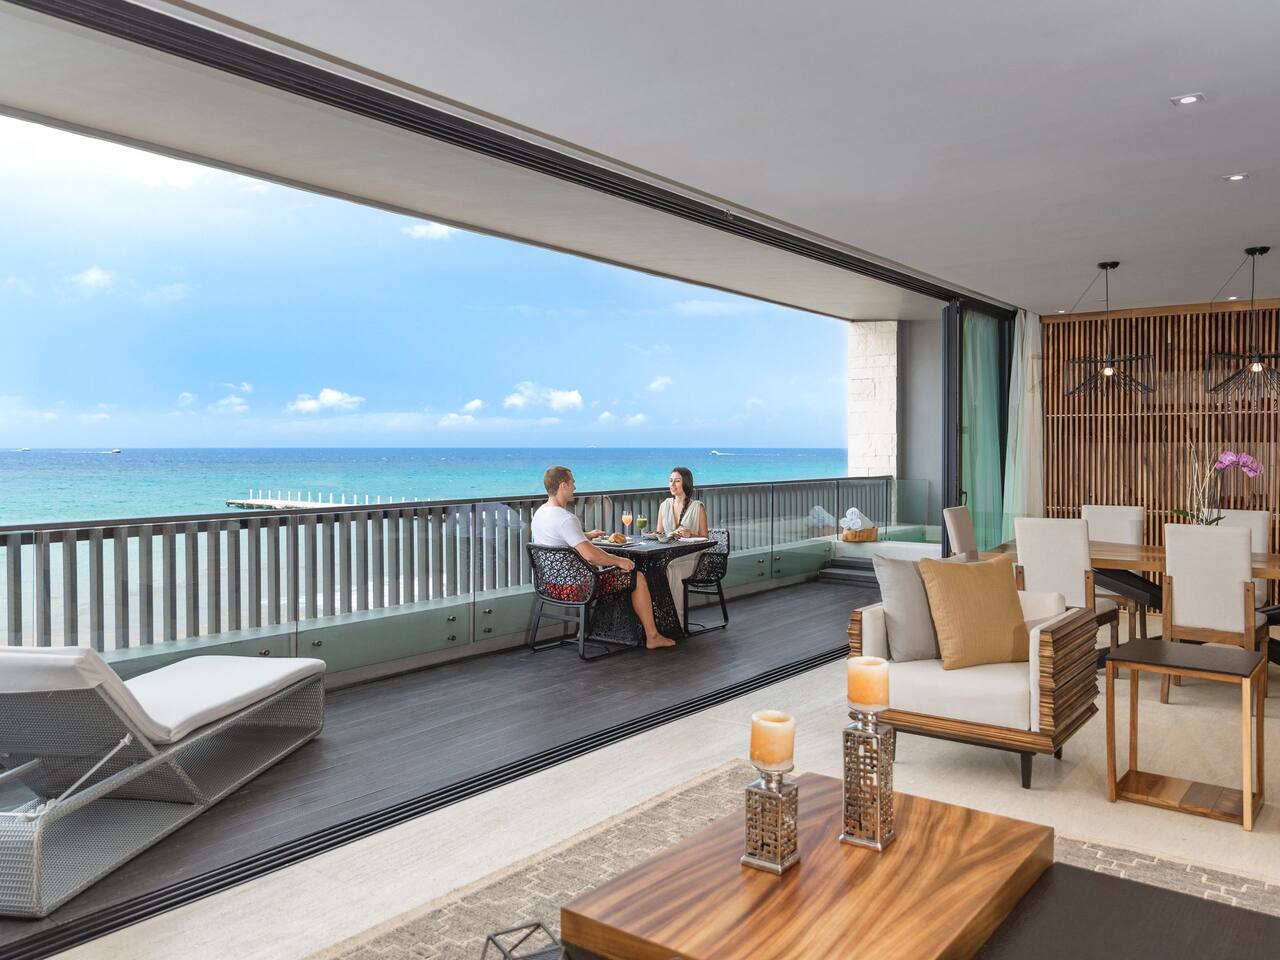 CUNPC_P434 Lifestyle Presidential Suite Oceanfront View Terrace